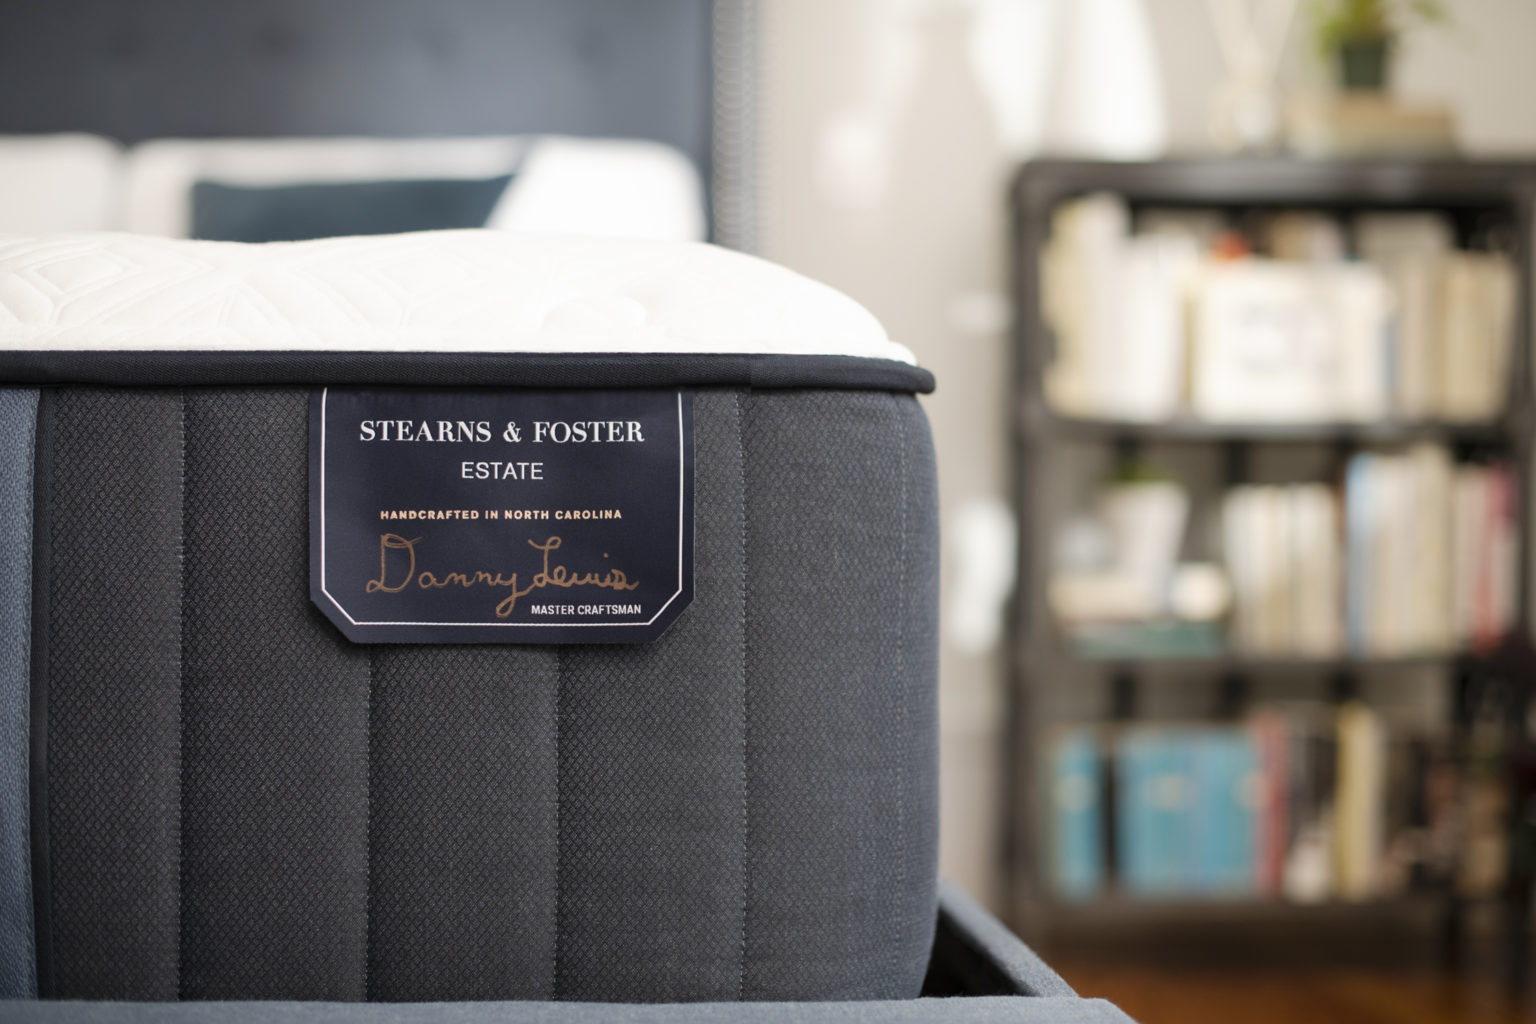 stearns & foster rockwell luxury ultra firm mattress